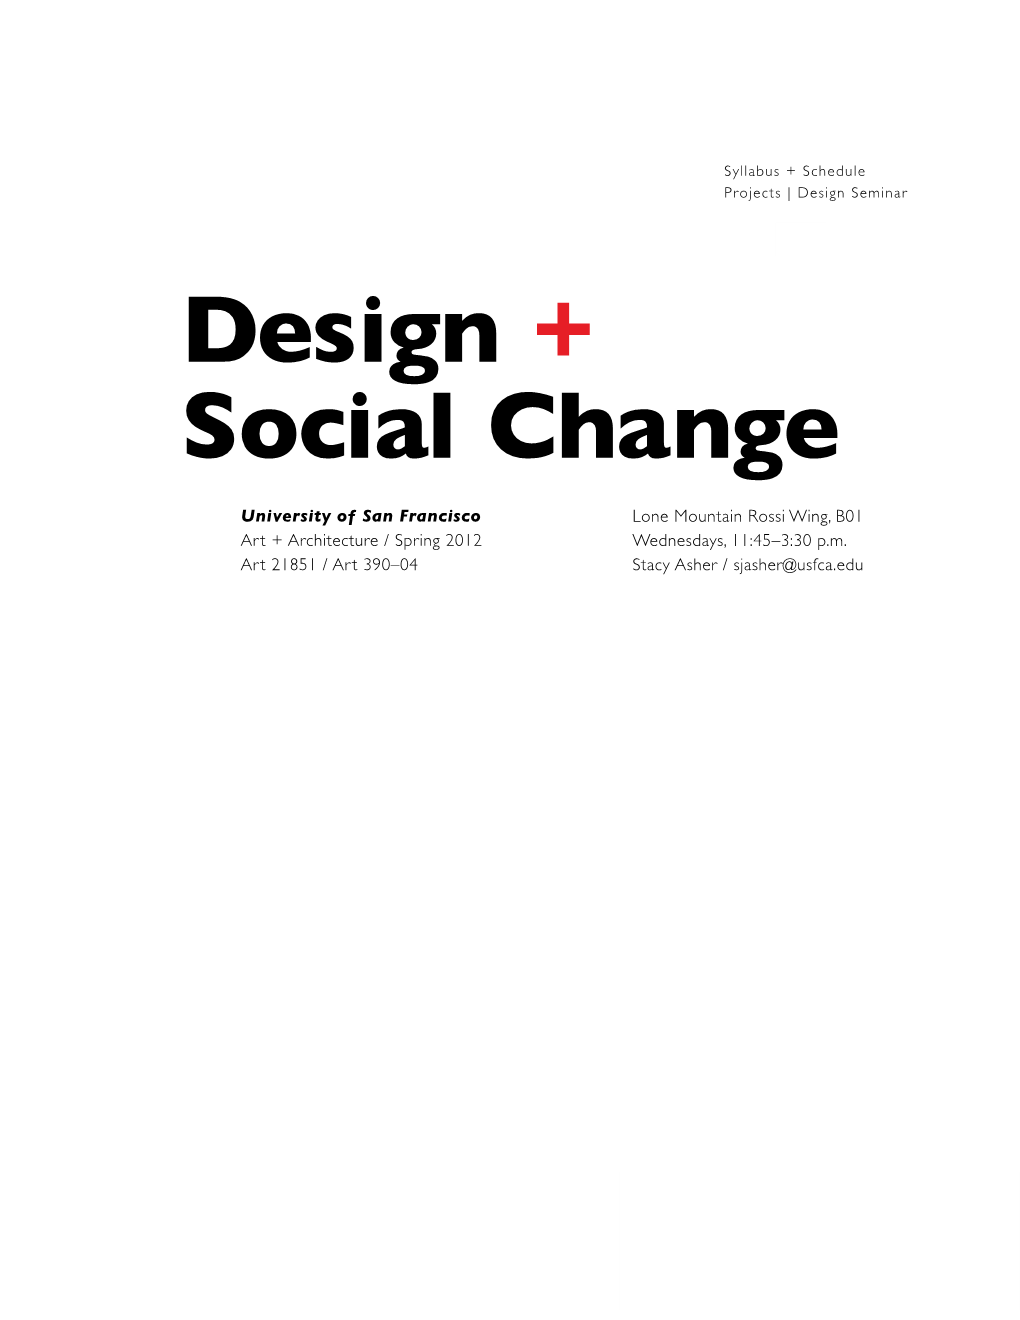 Design + Social Change